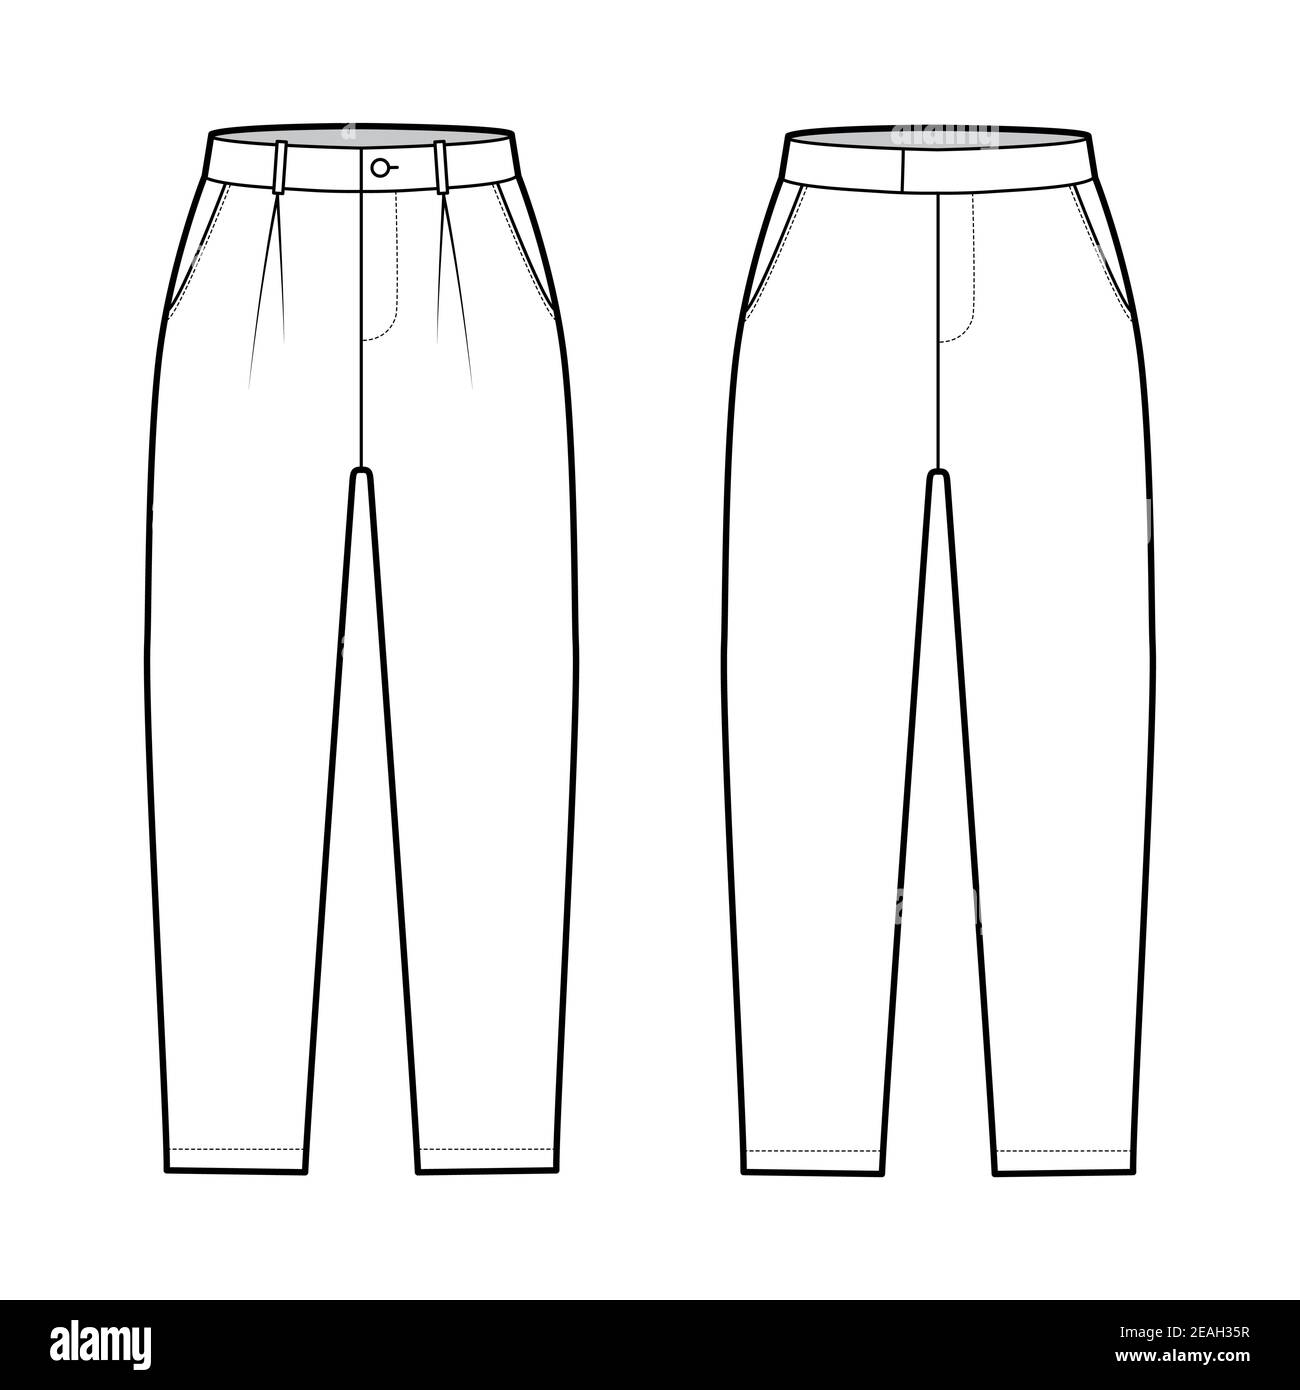 Set of Short capri pants technical fashion illustration with mid-calf ...